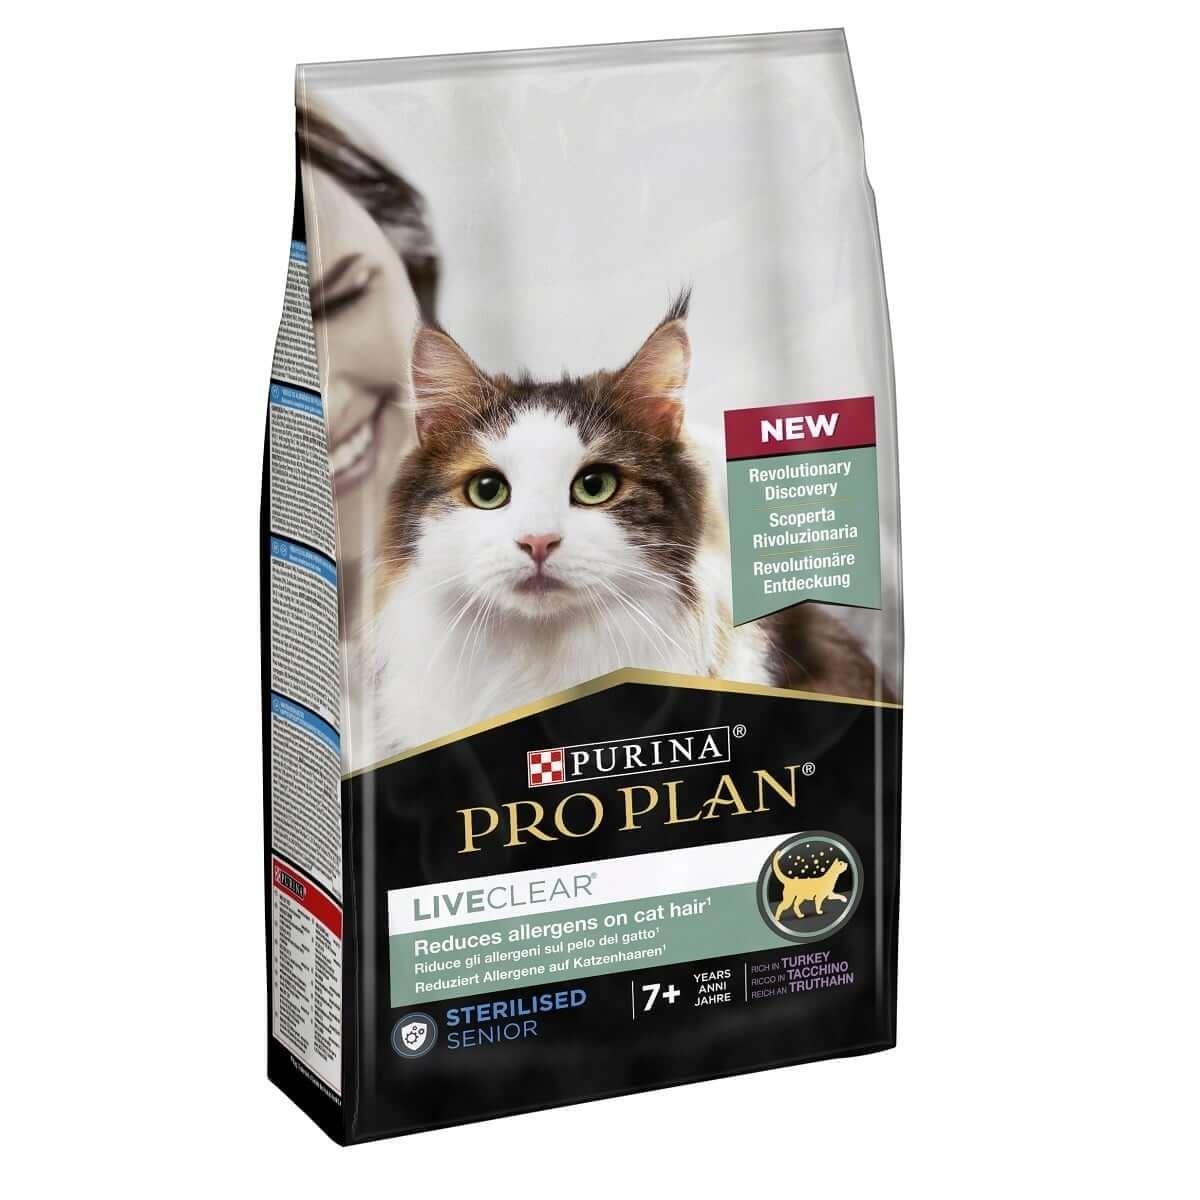 Pro Plan LiveClear Kısırlaştırılmış Hindili Yaşlı Kedi Maması 1.4 Kg